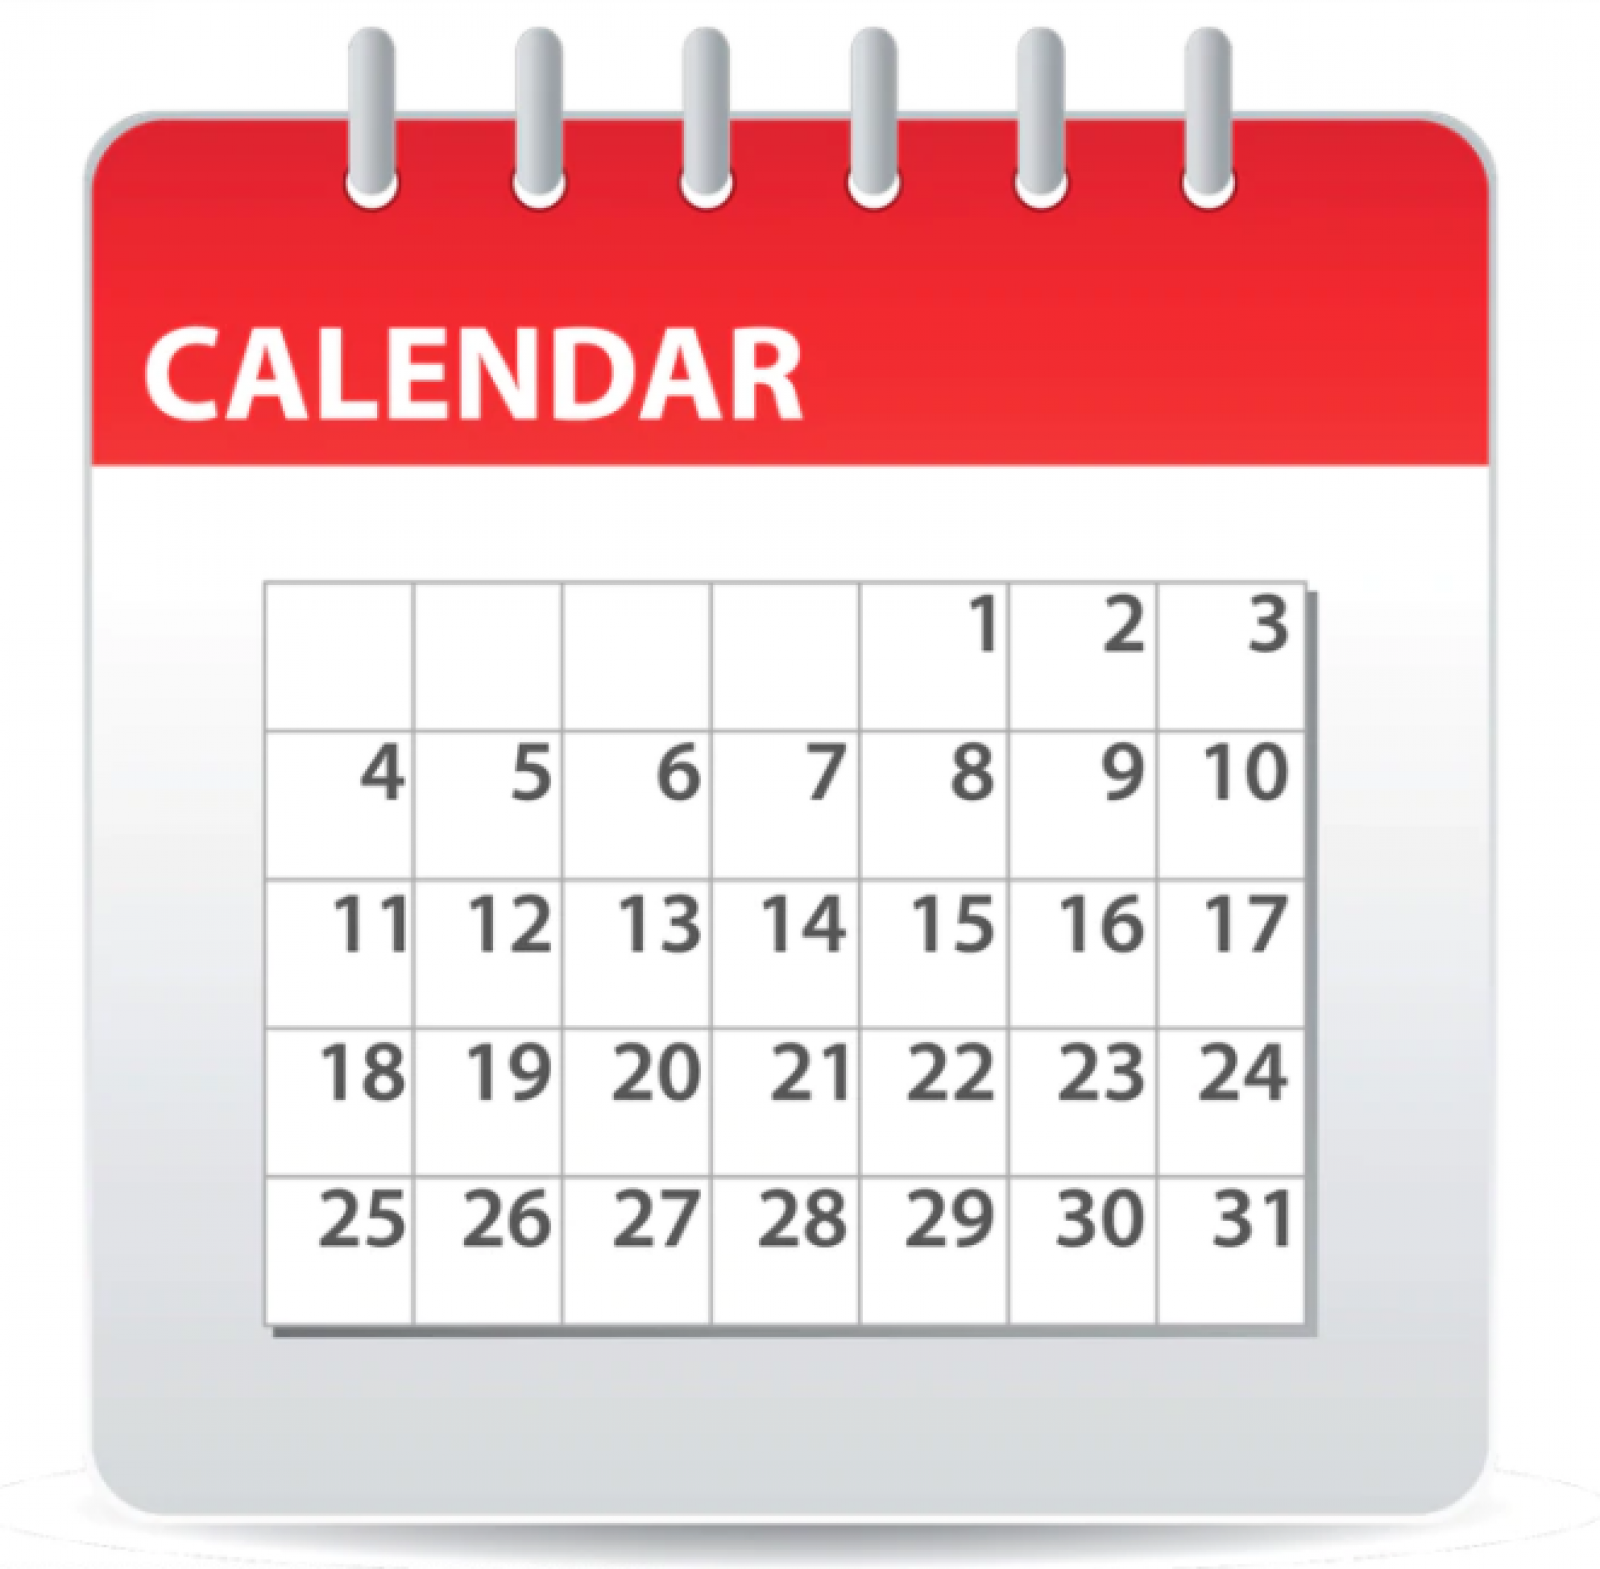 Calendar Dates for Ferris 2020 2021 Ferris Elementary School